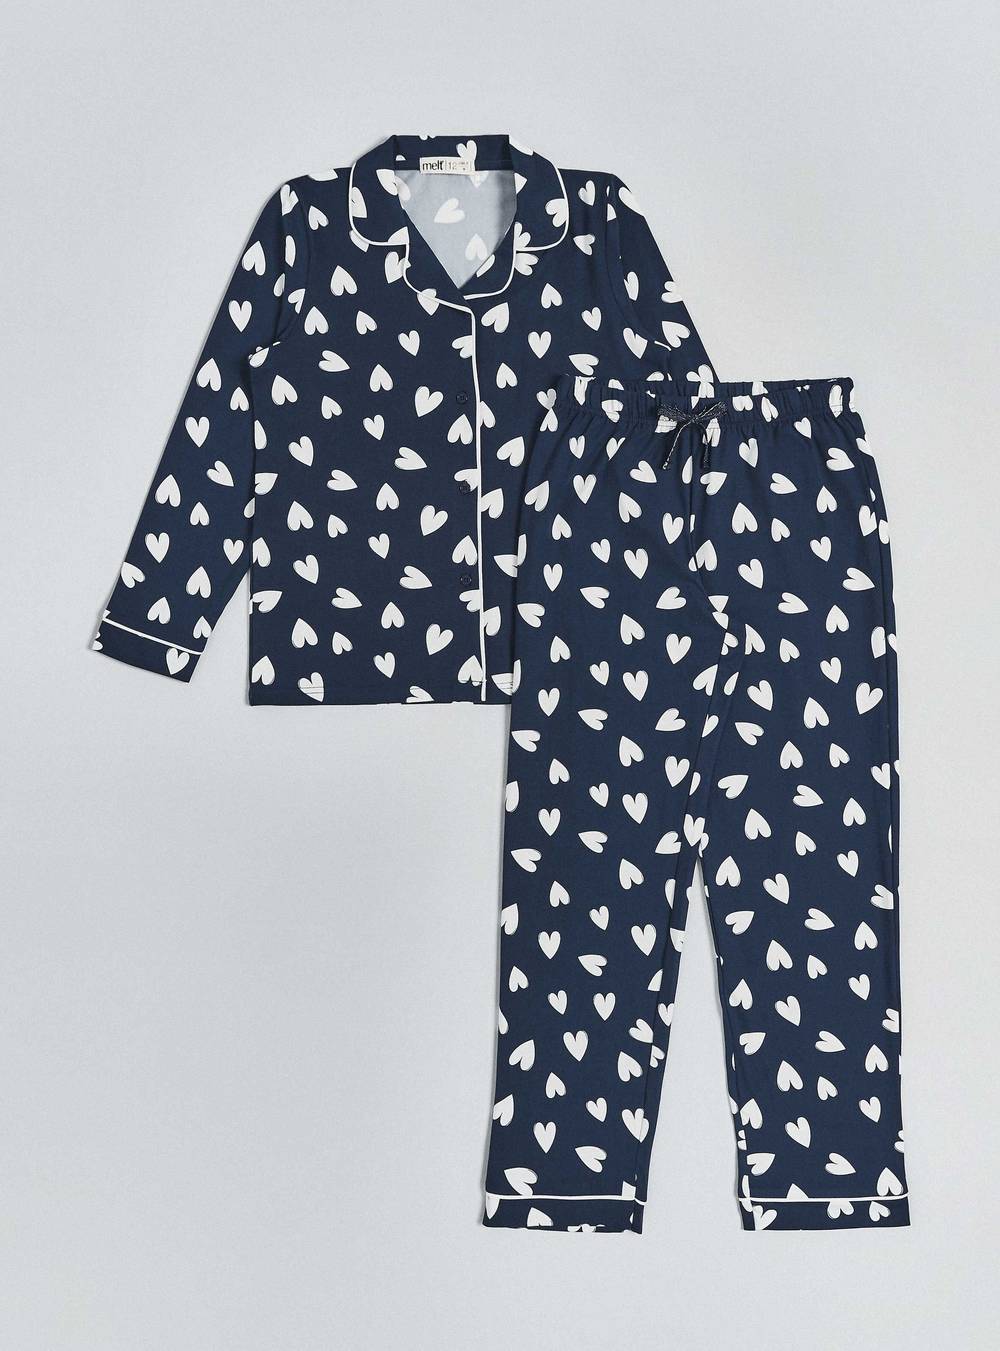 Melt pijama niña touch soft (talla 10a/azul oscuro)